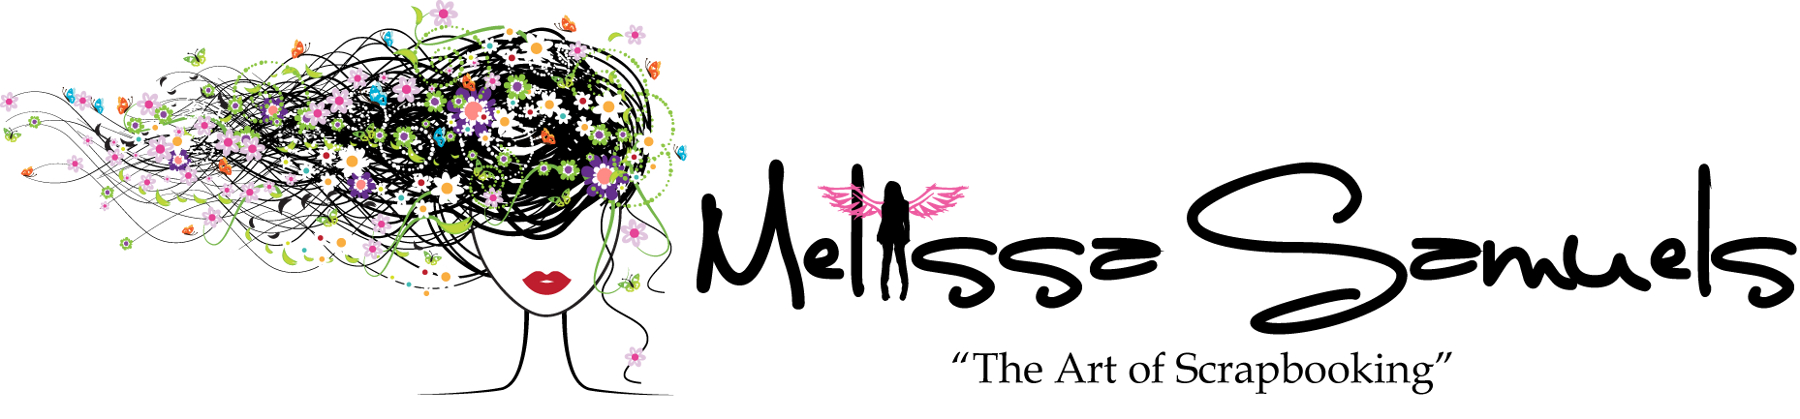 Melissa Samuels – "The Art of Scrapbooking"